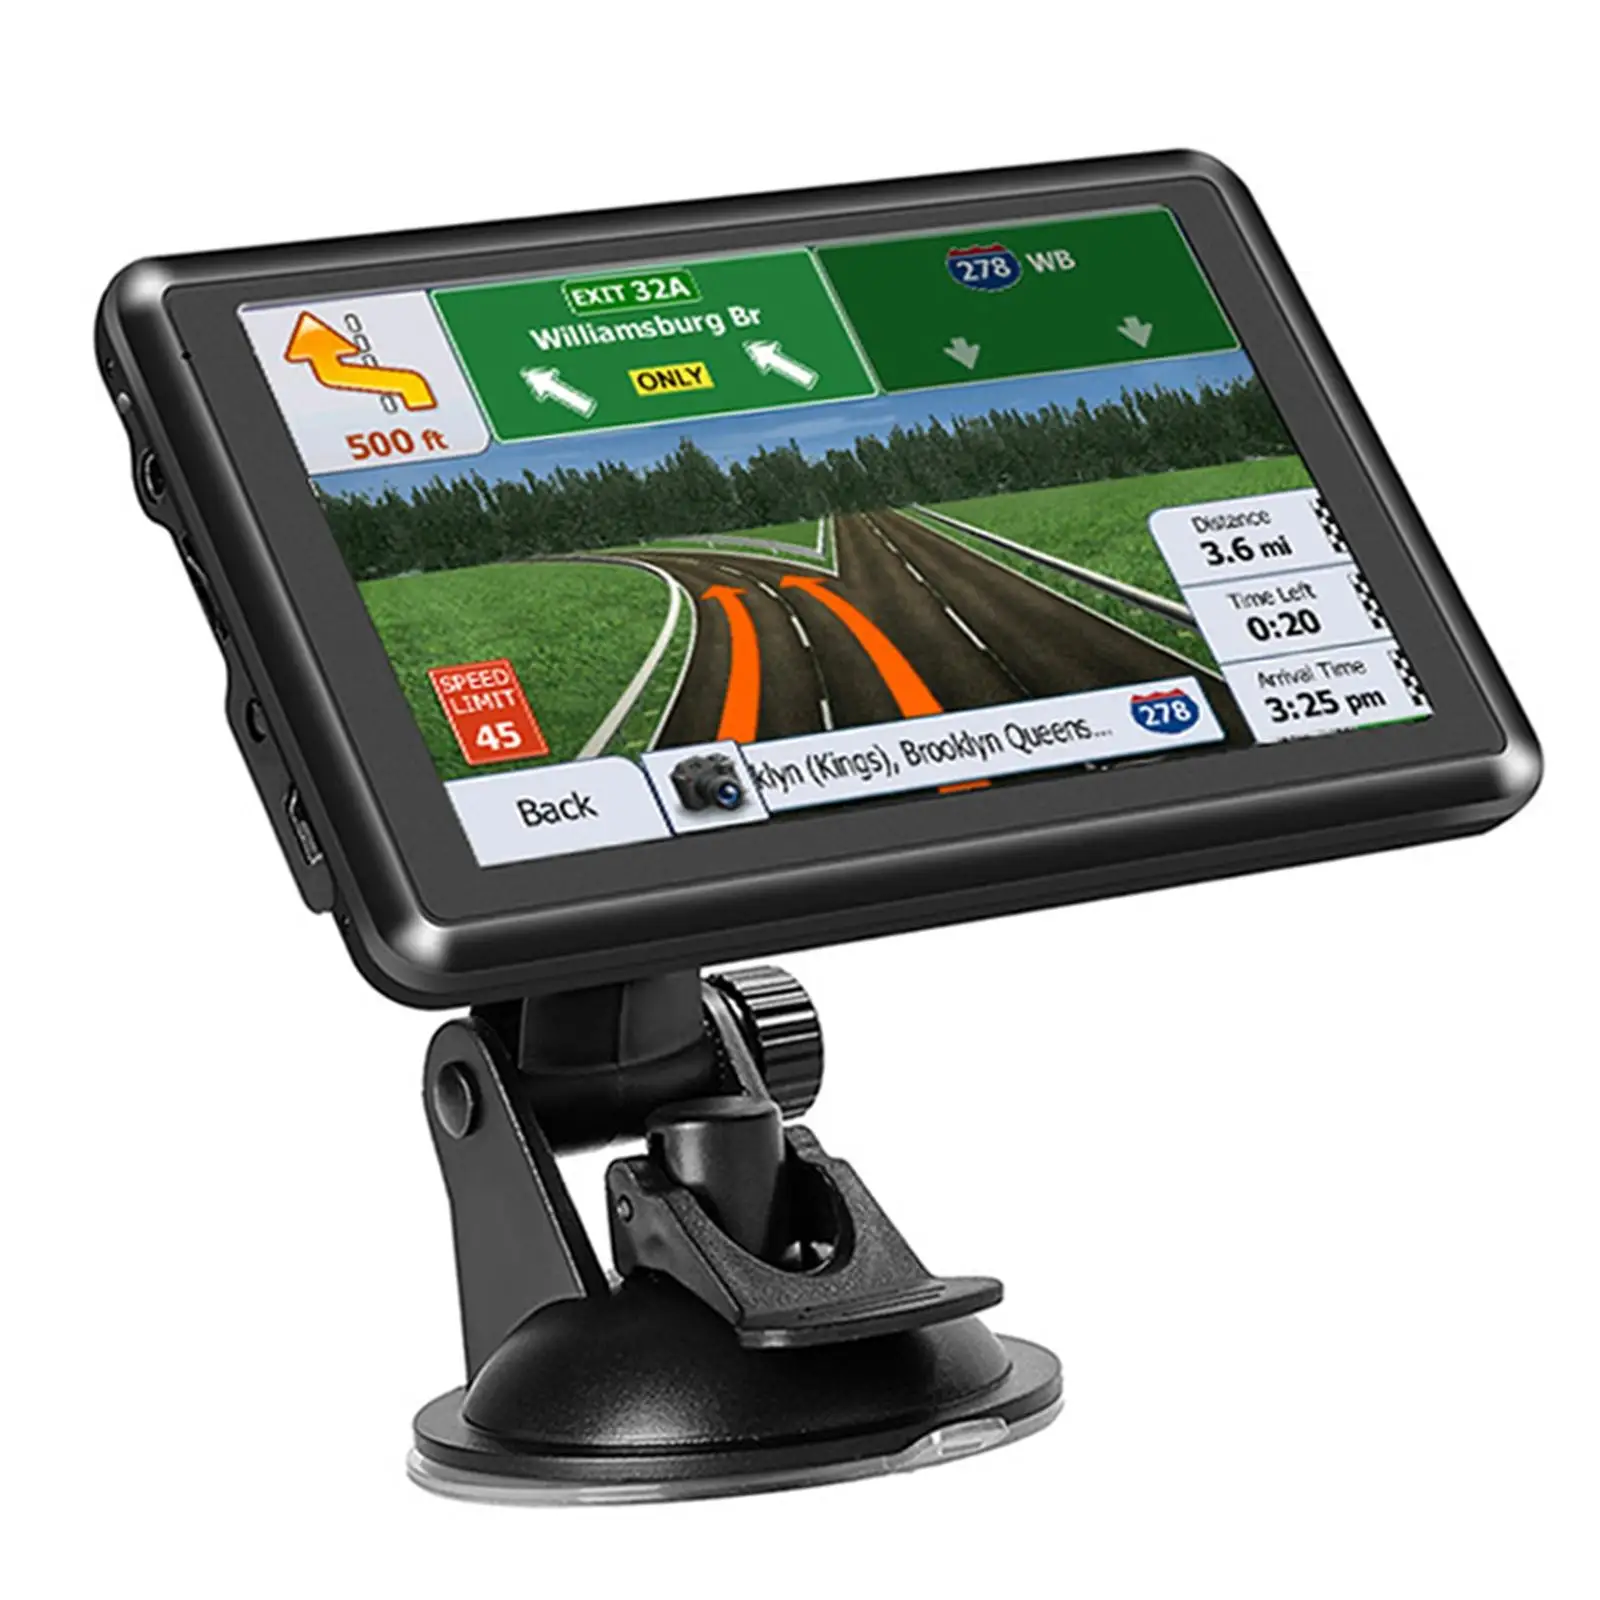 5 inch Touchscreen Car Truck GPS Navigation System GPS Satellite Navigator, 8G &128 MB